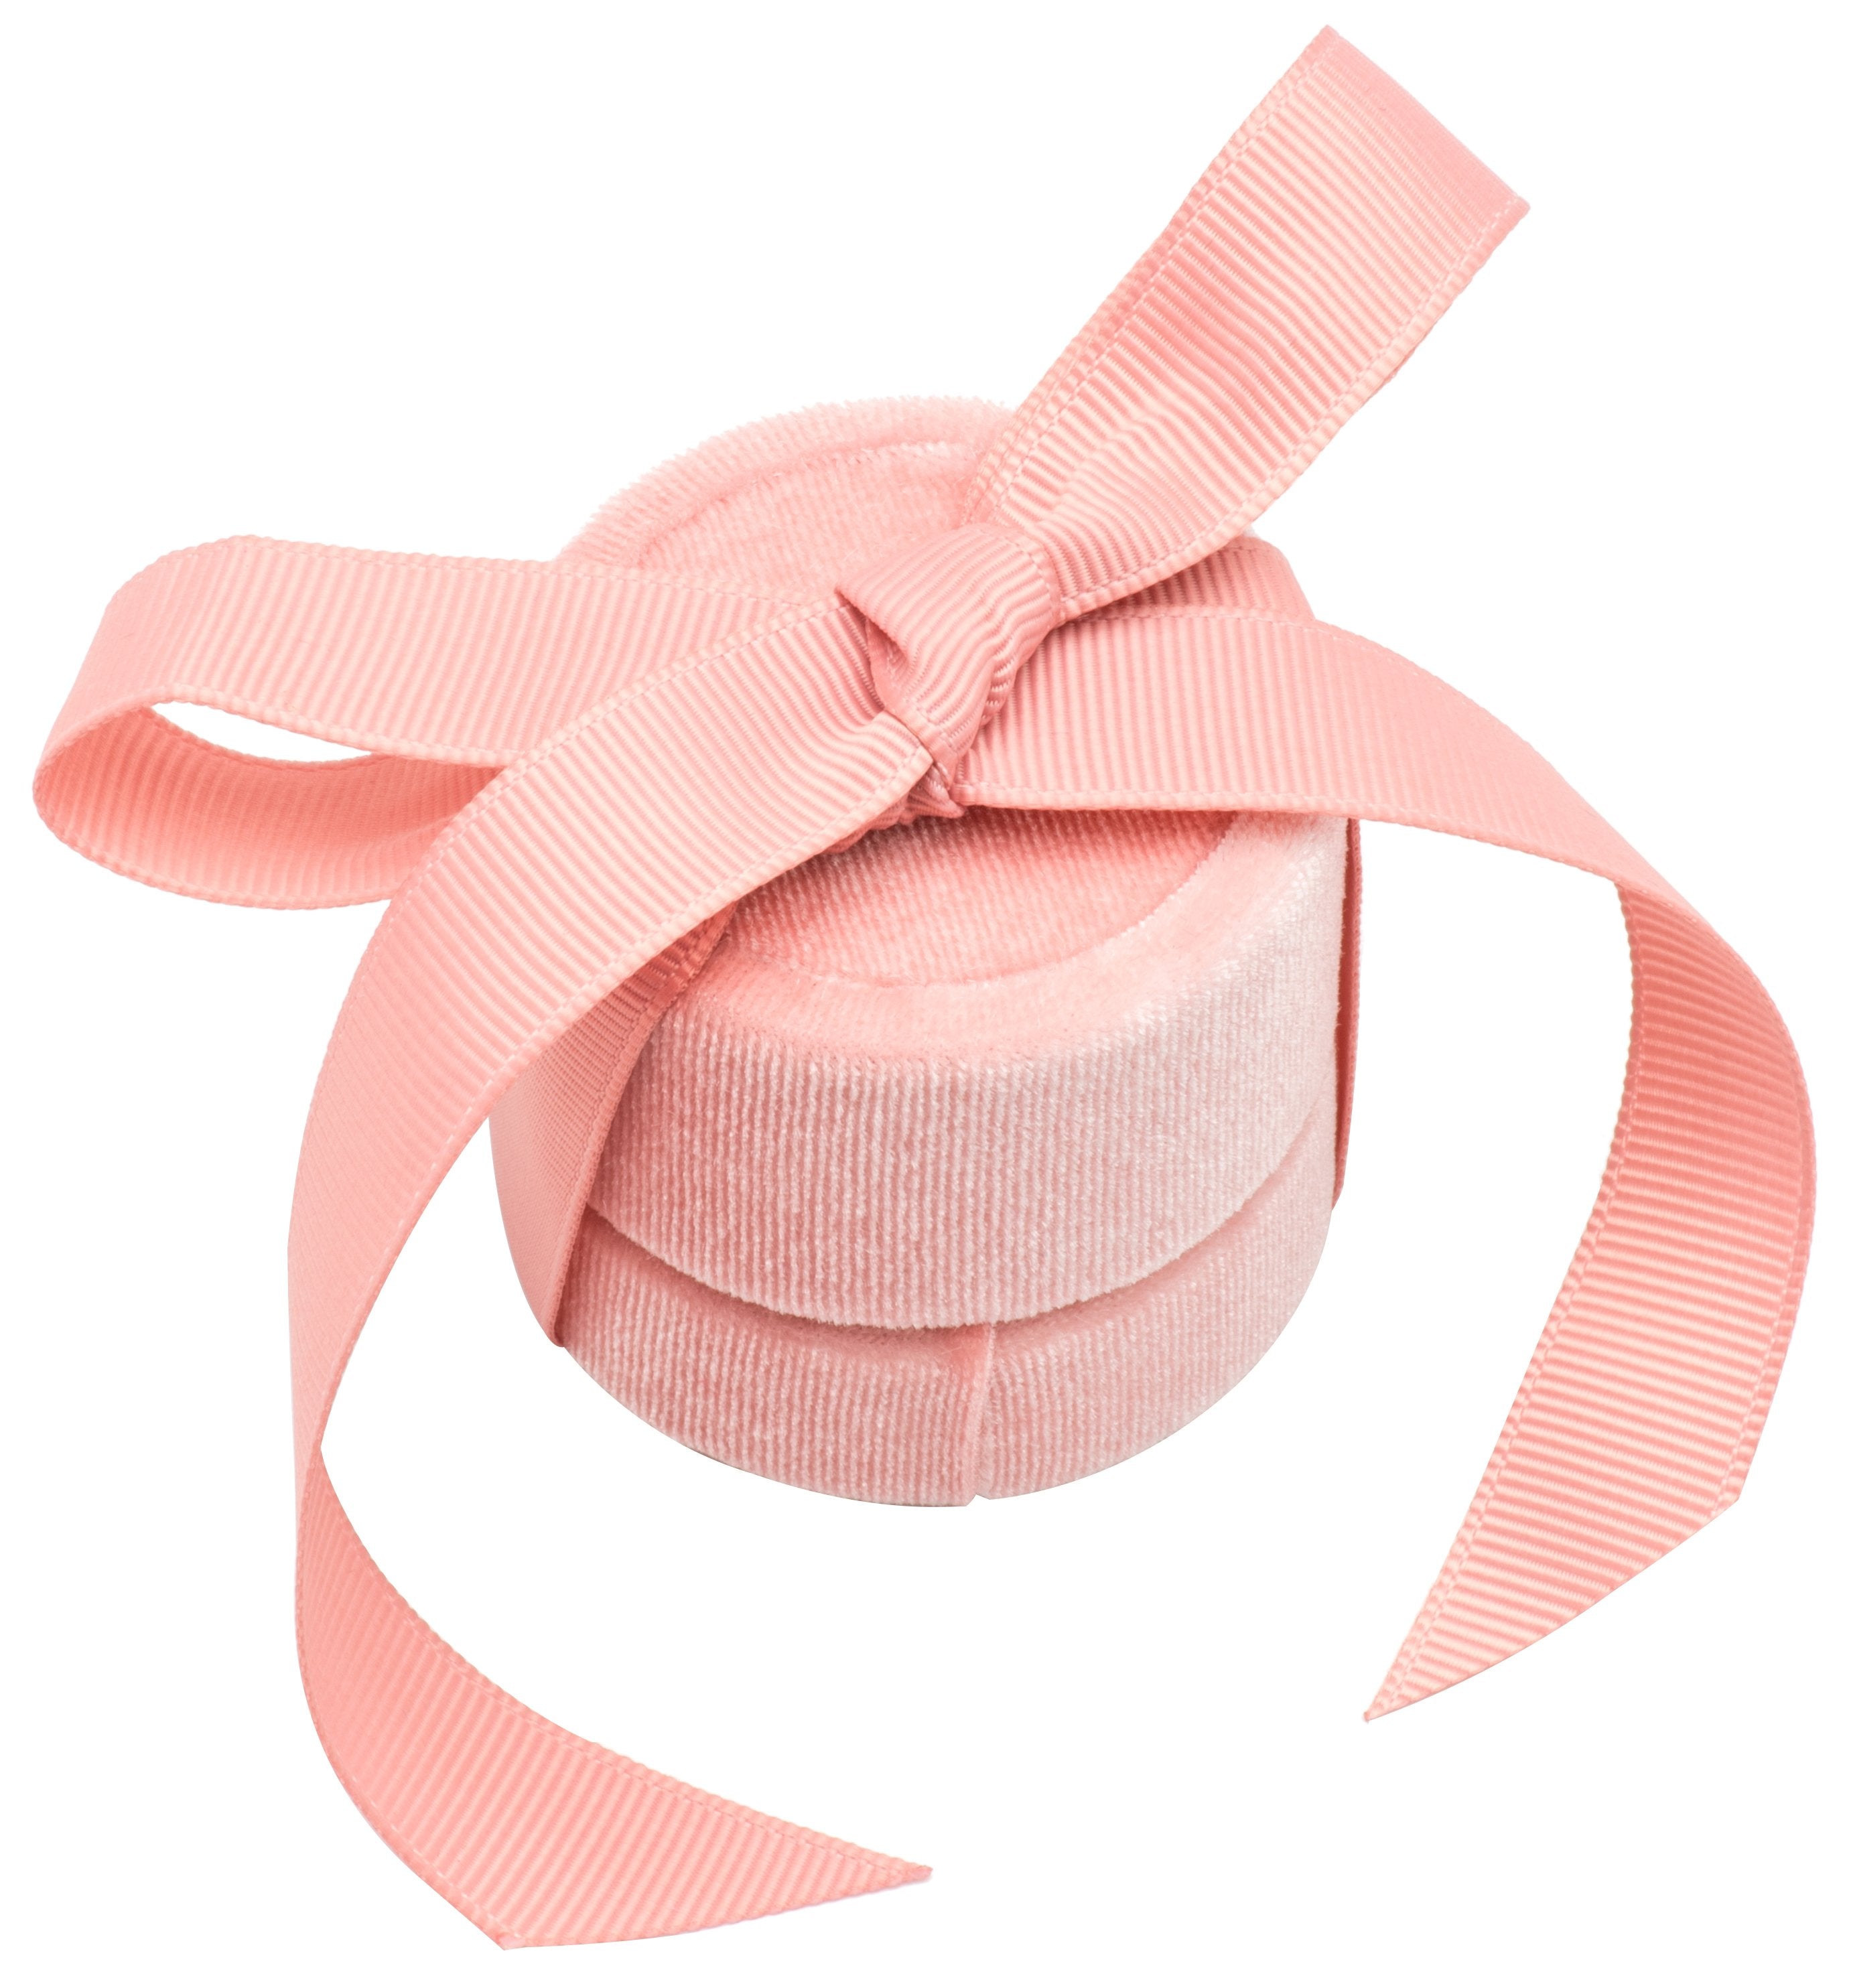 Small Premium Velvet Round Ring Box Case for Wedding Ceremony Engagement Proposal